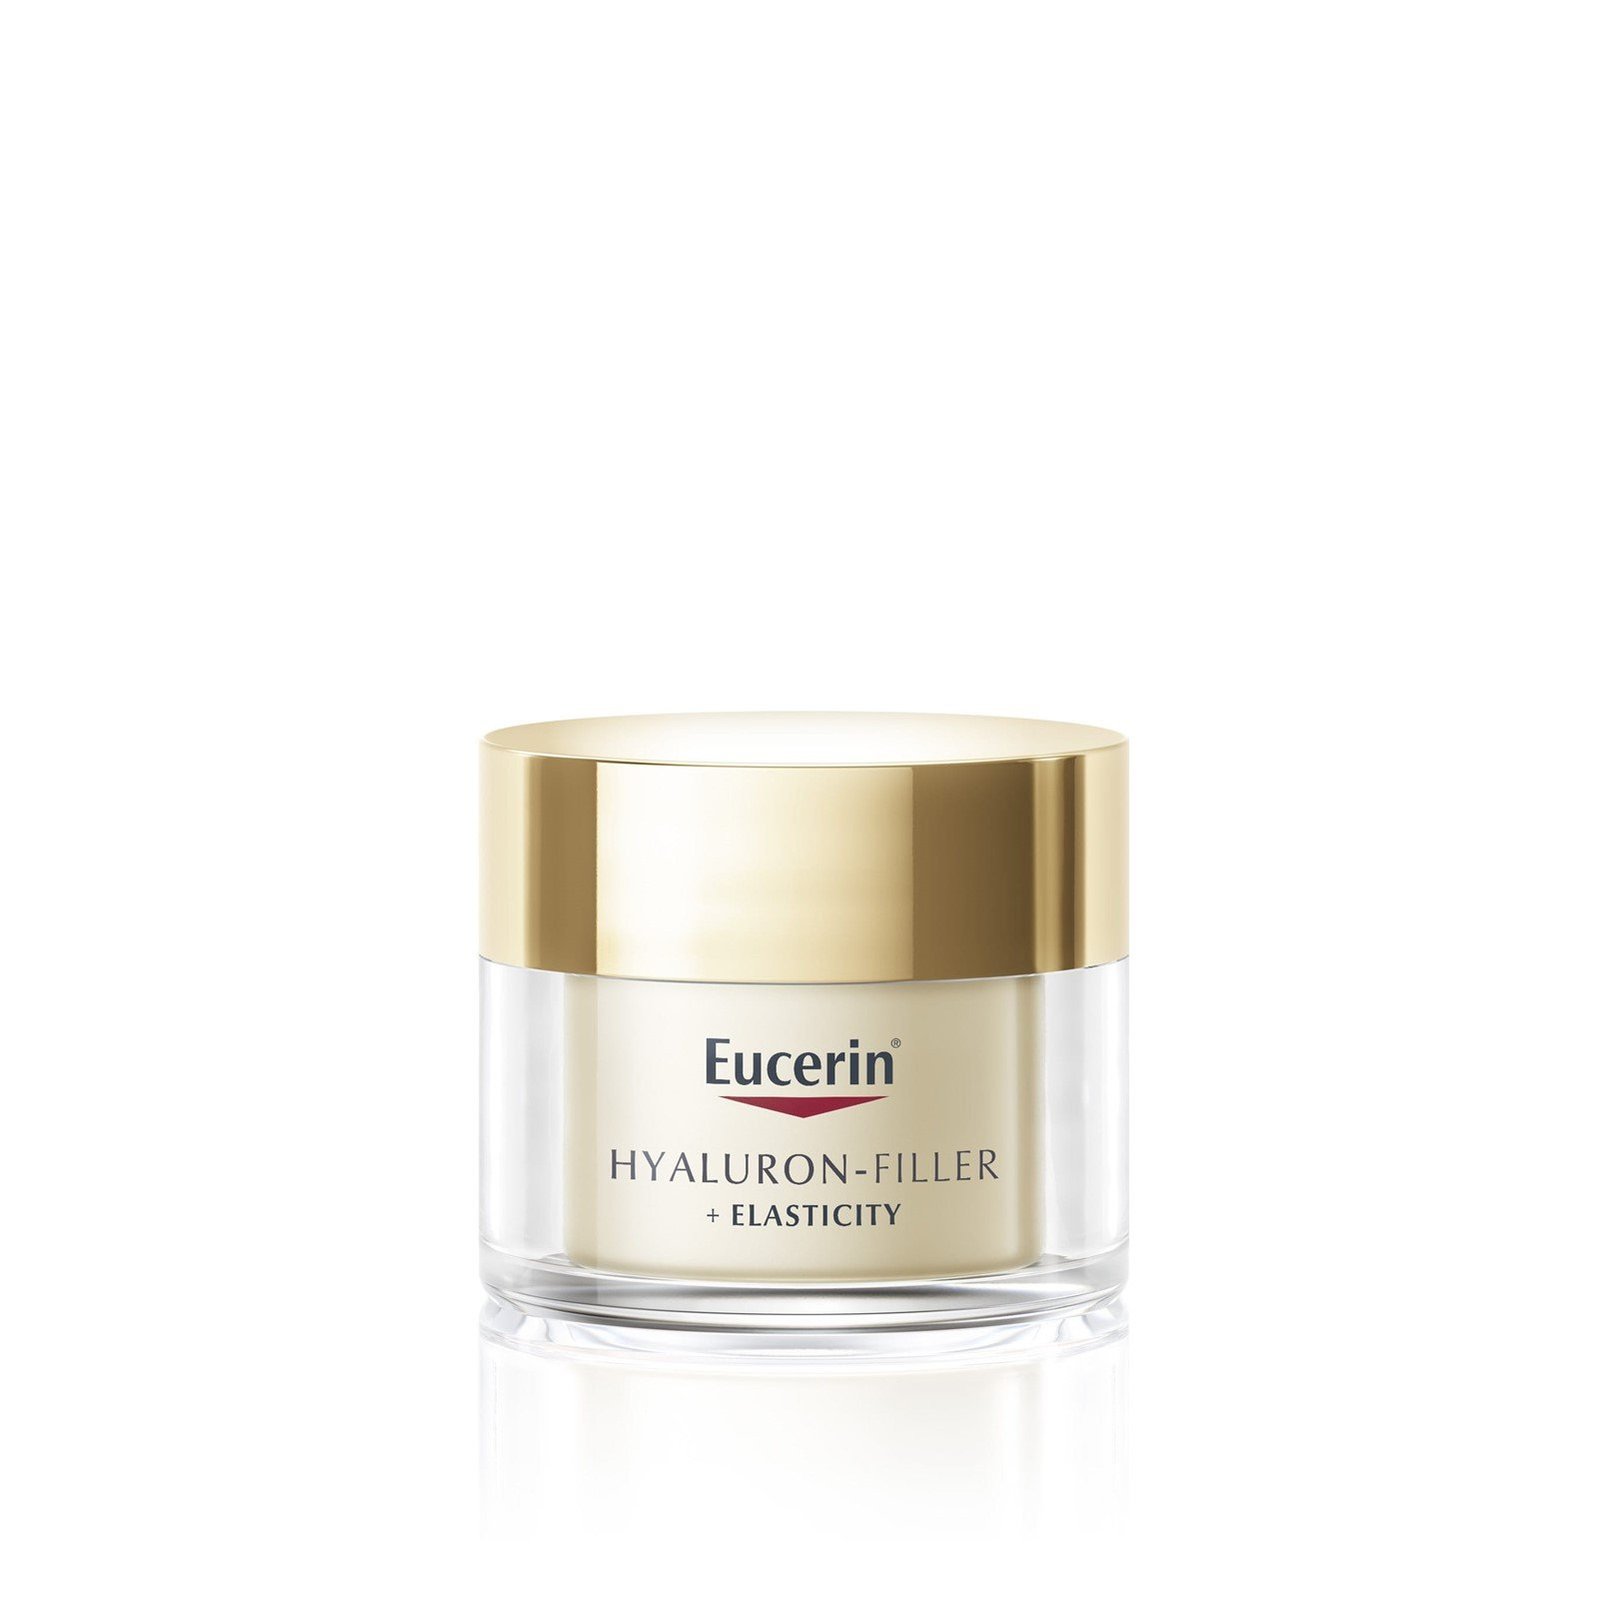 Eucerin Hyaluron-Filler + Elasticity Day Cream SPF15 50ml (1.69floz)